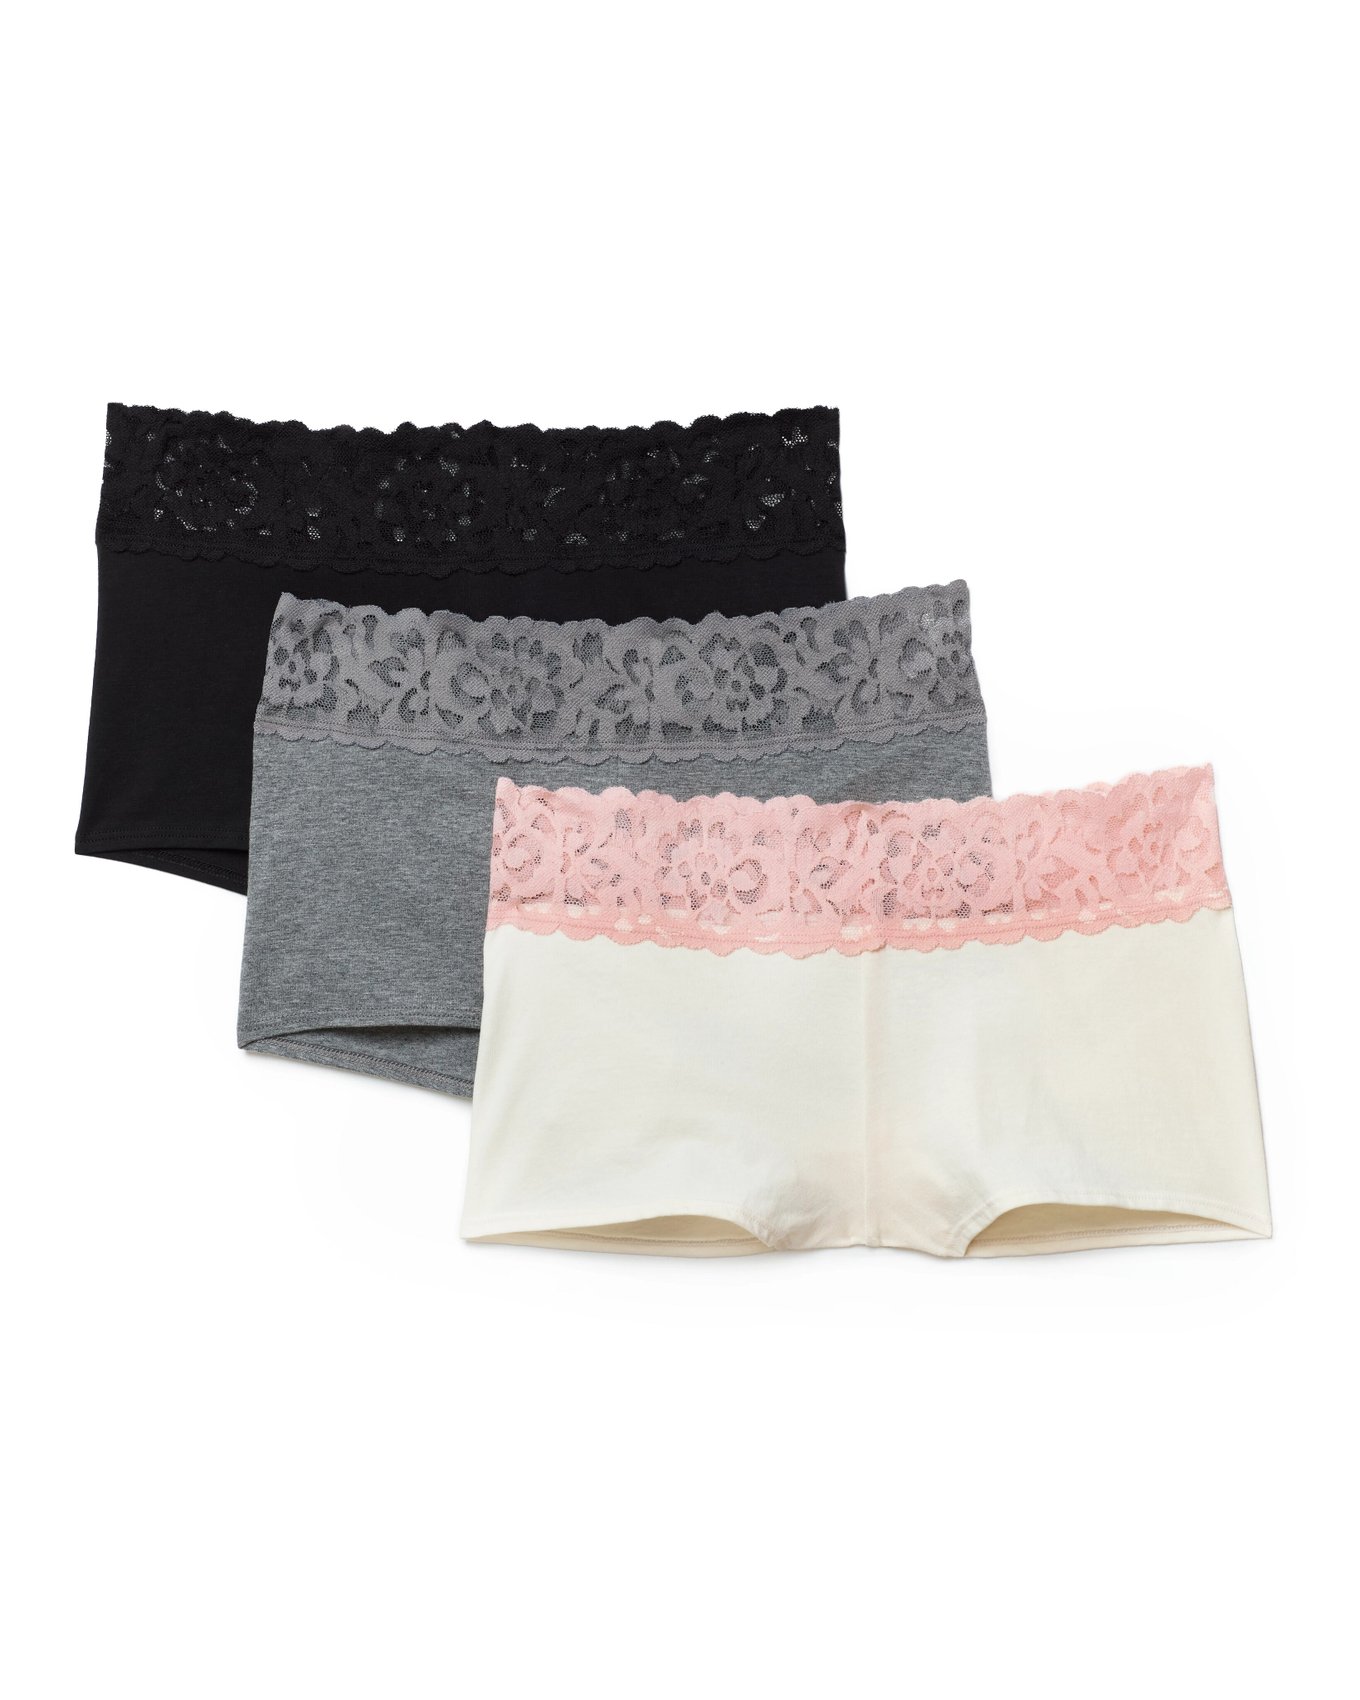 Shop Warm Sun Women's Breathable High Waist Panties - L, Pack of